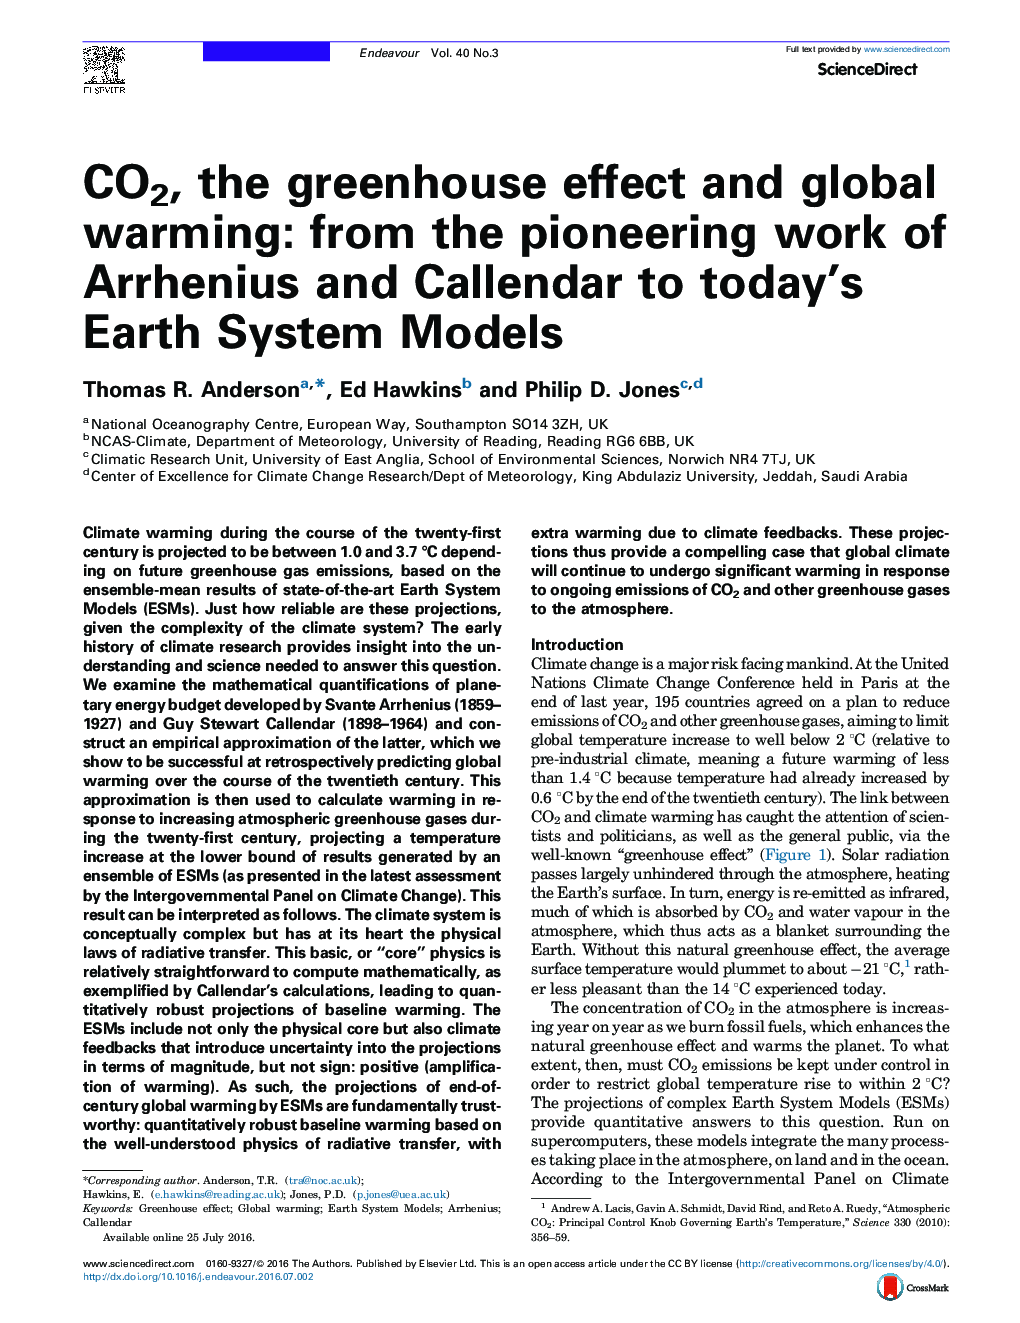 CO2، اثر گلخانه ای و گرمایش جهانی: از کار پیشگام Arrhenius و Callendar به مدل های سیستم های امروز زمین